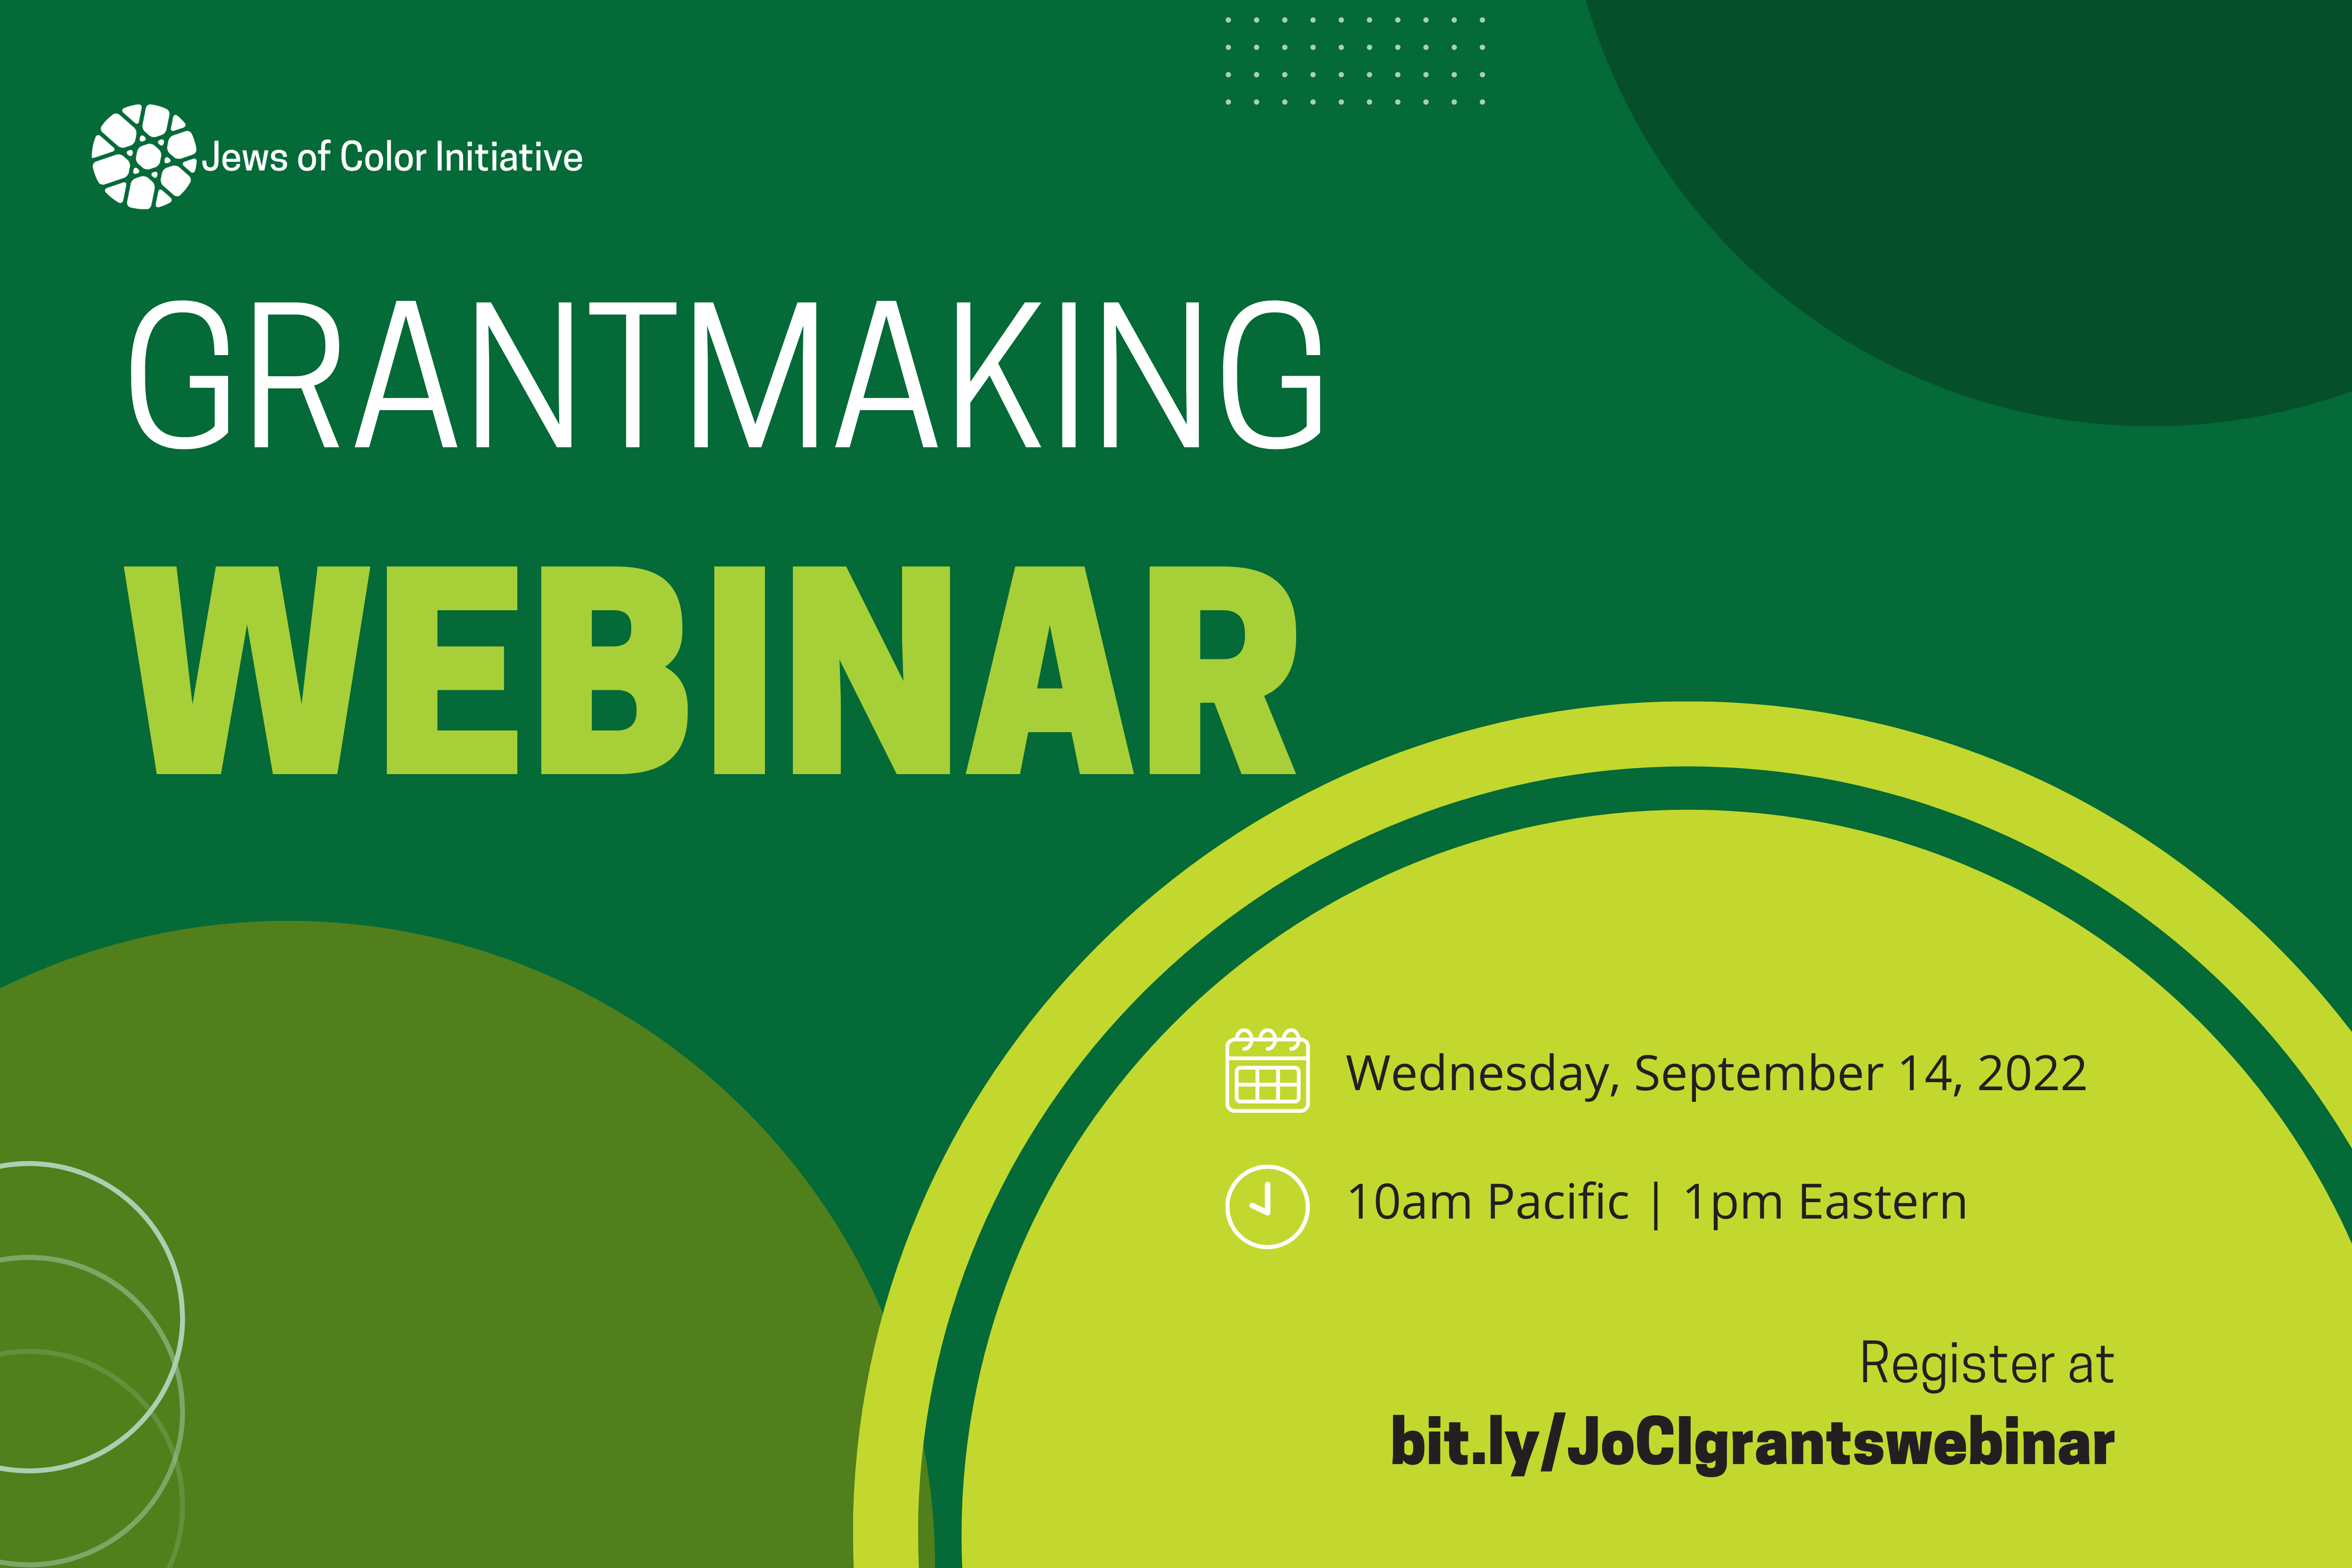 Grantmaking Webinar, Wednesday, September 14, 10am Pacific, 1pm Eastern. Register at bit.ly/JoCIgrantswebinar